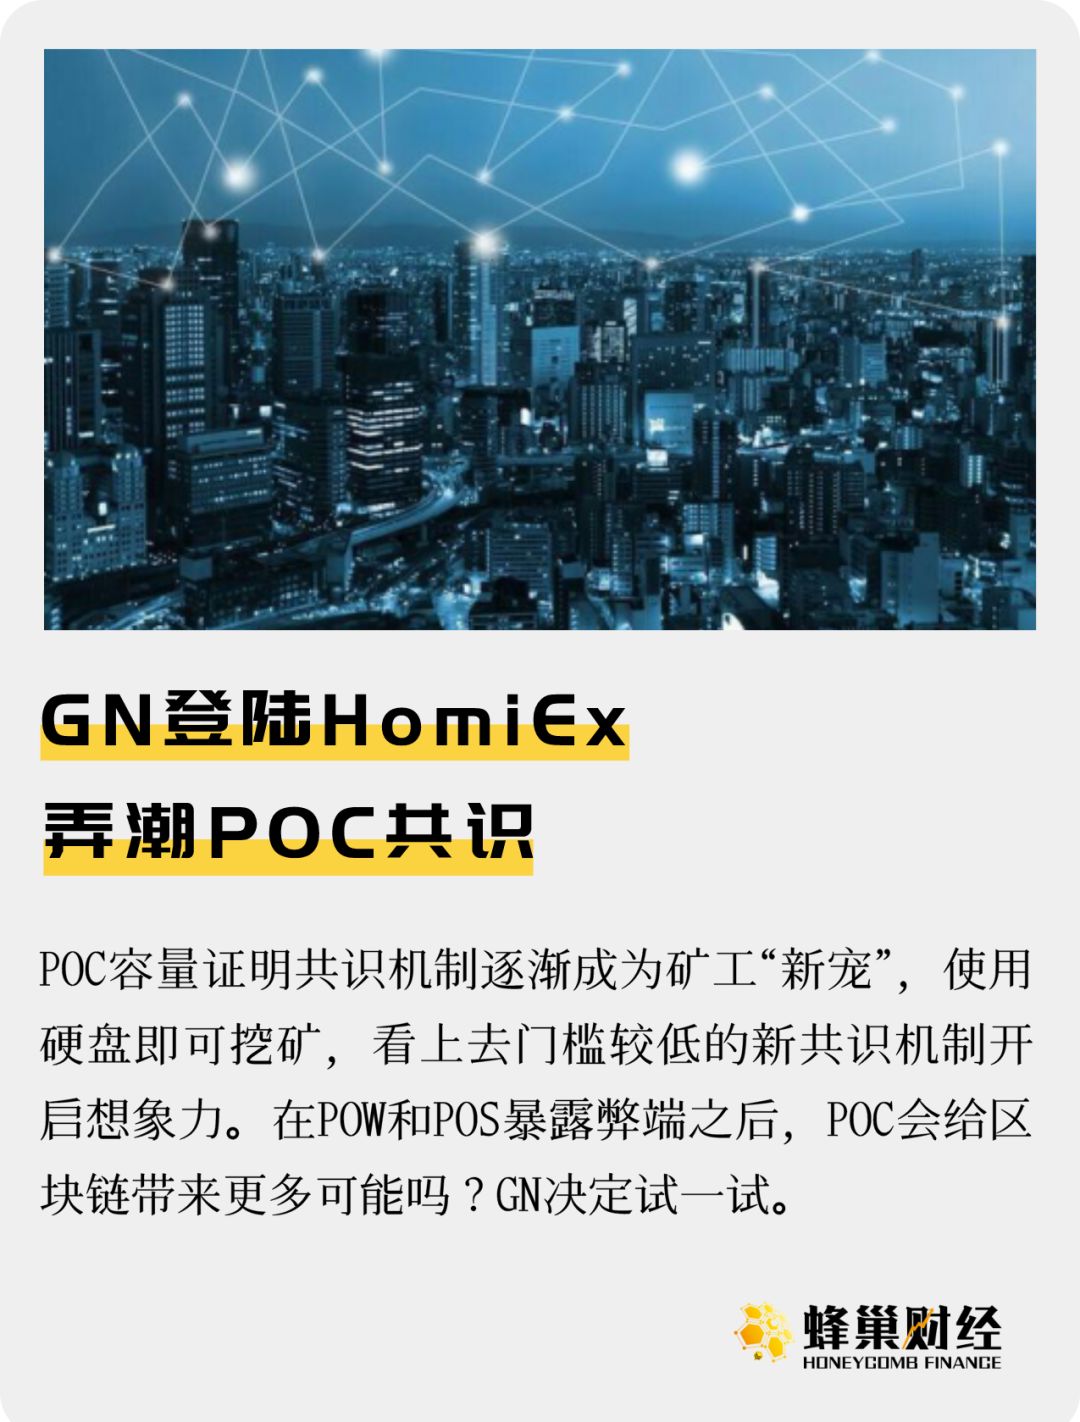 “POC以太坊”GN将上线HomiEx或将开启硬盘挖矿新纪元